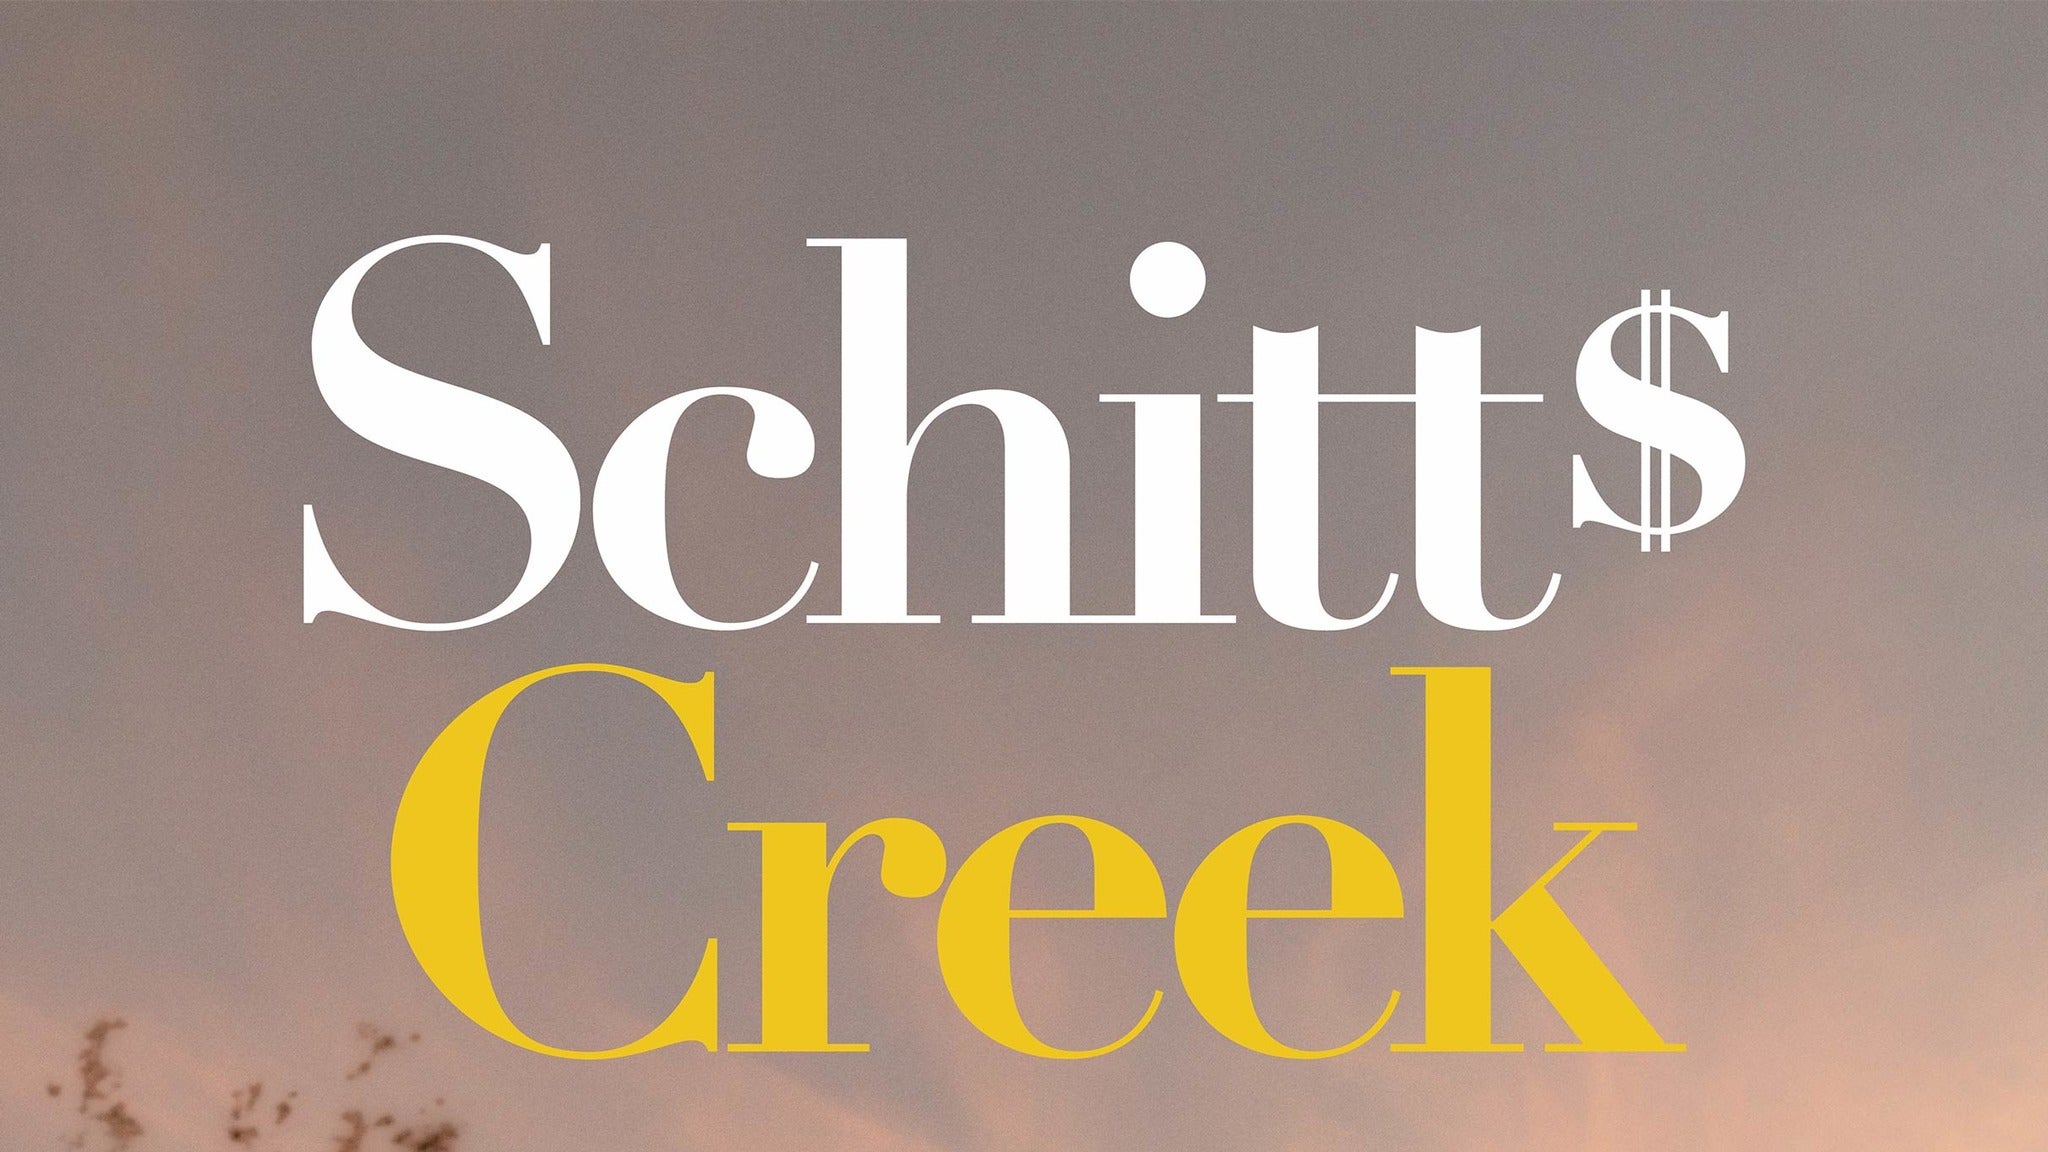 Schitt's Creek: The Farewell Tour in Uncasville promo photo for Ticketmaster presale offer code